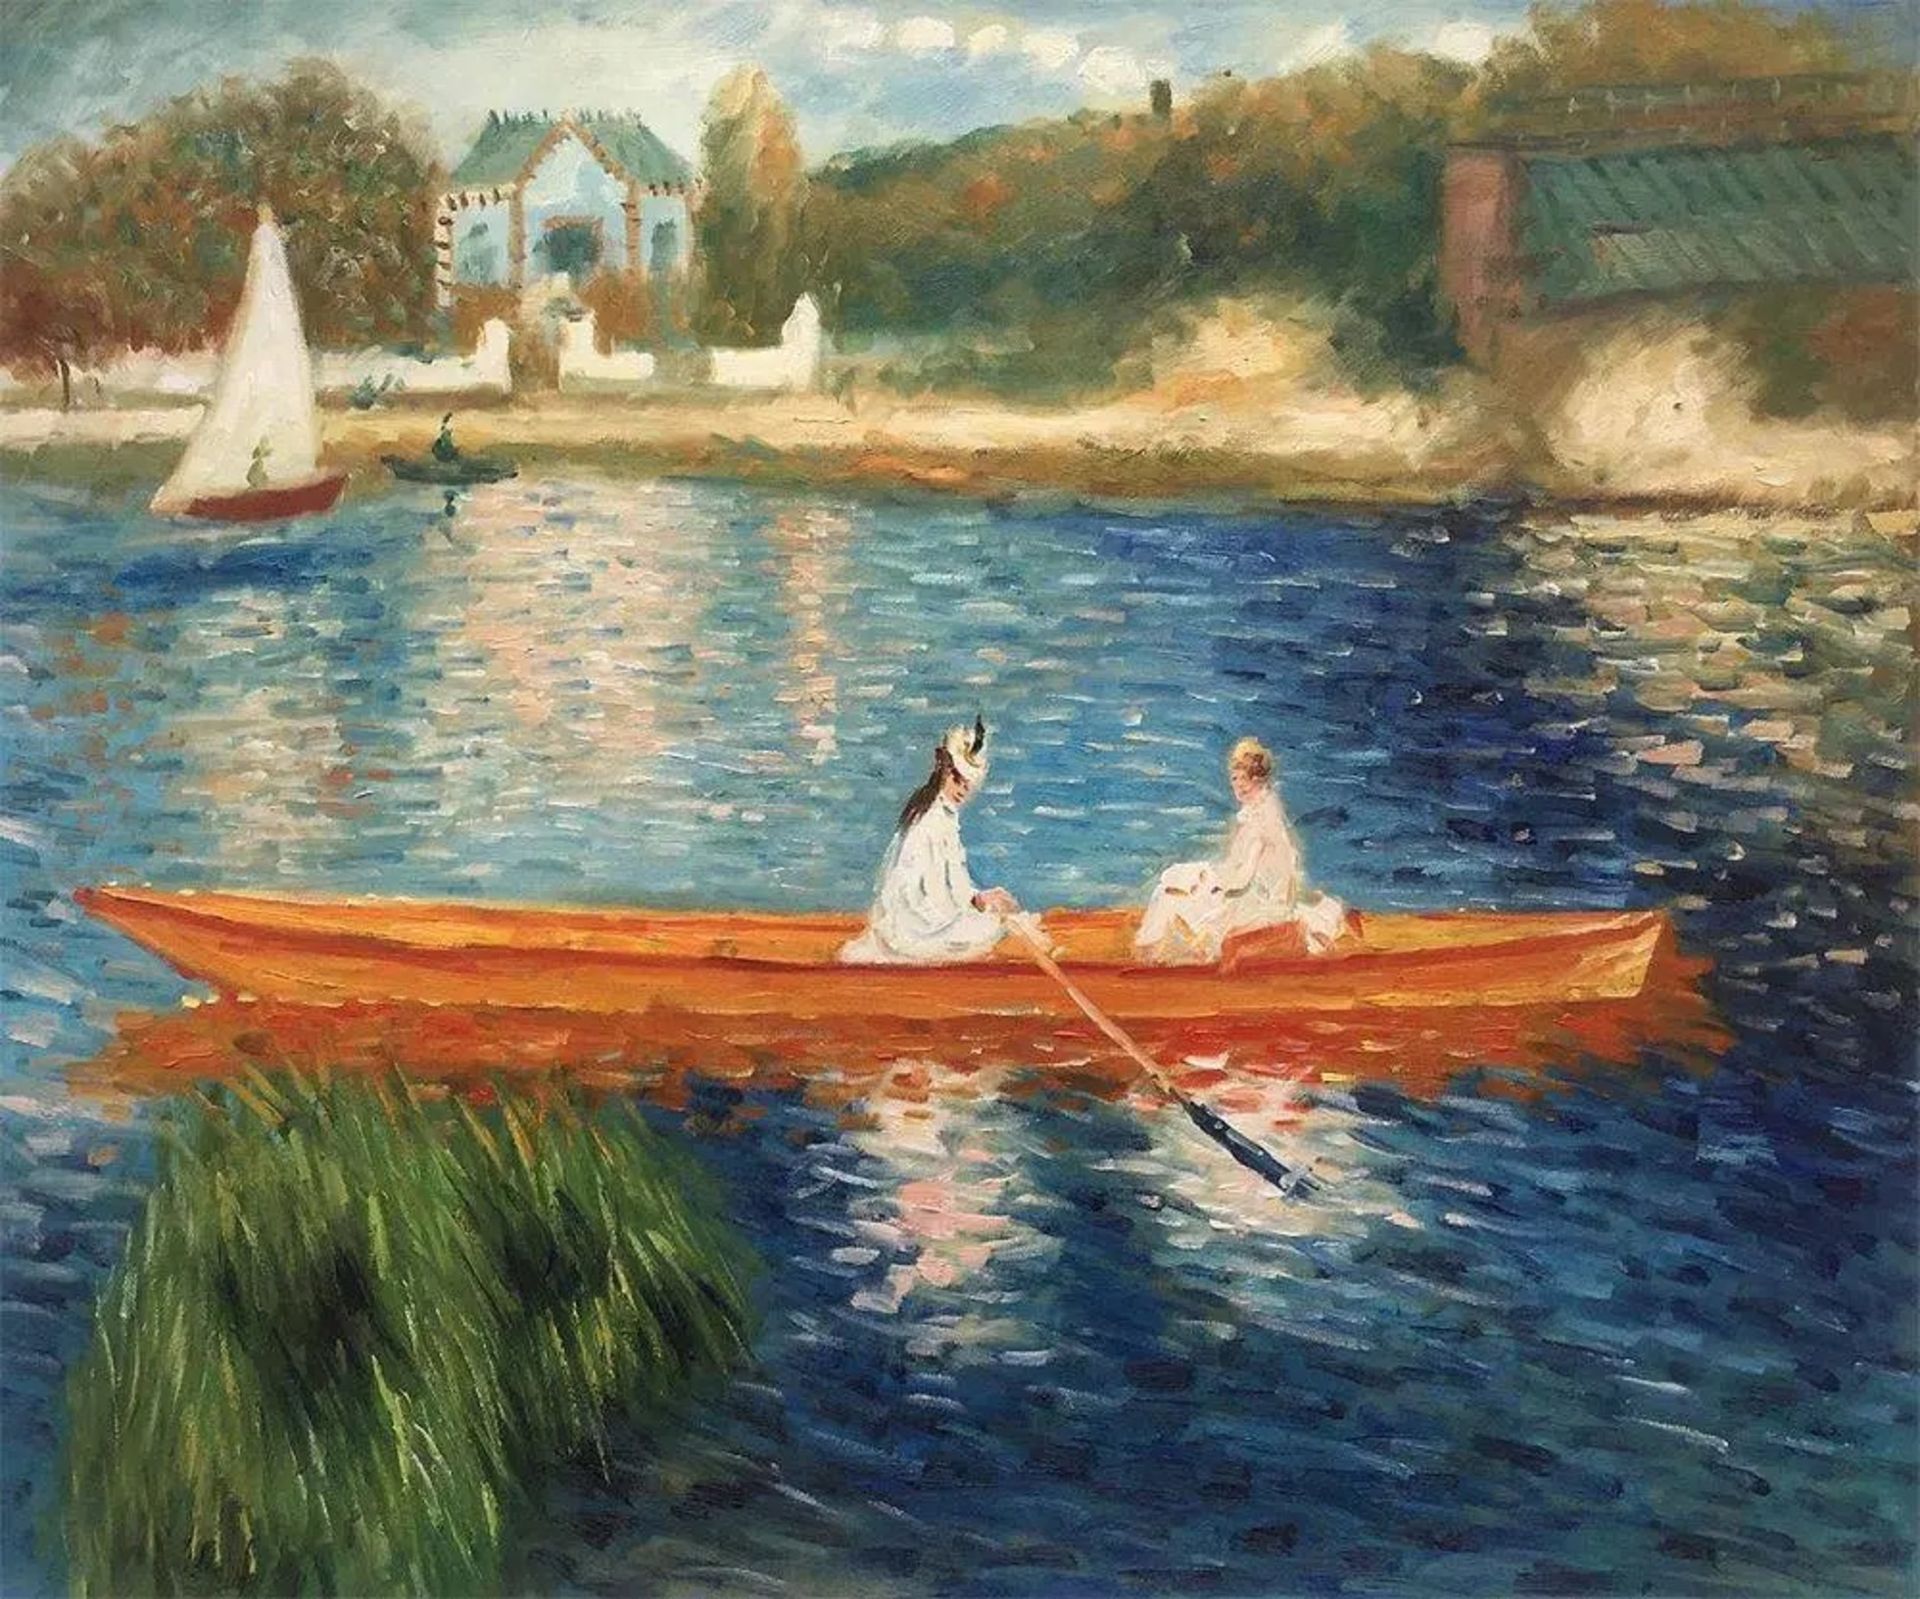 Pierre Auguste Renoir "Boating on the Seine, 1879" Painting